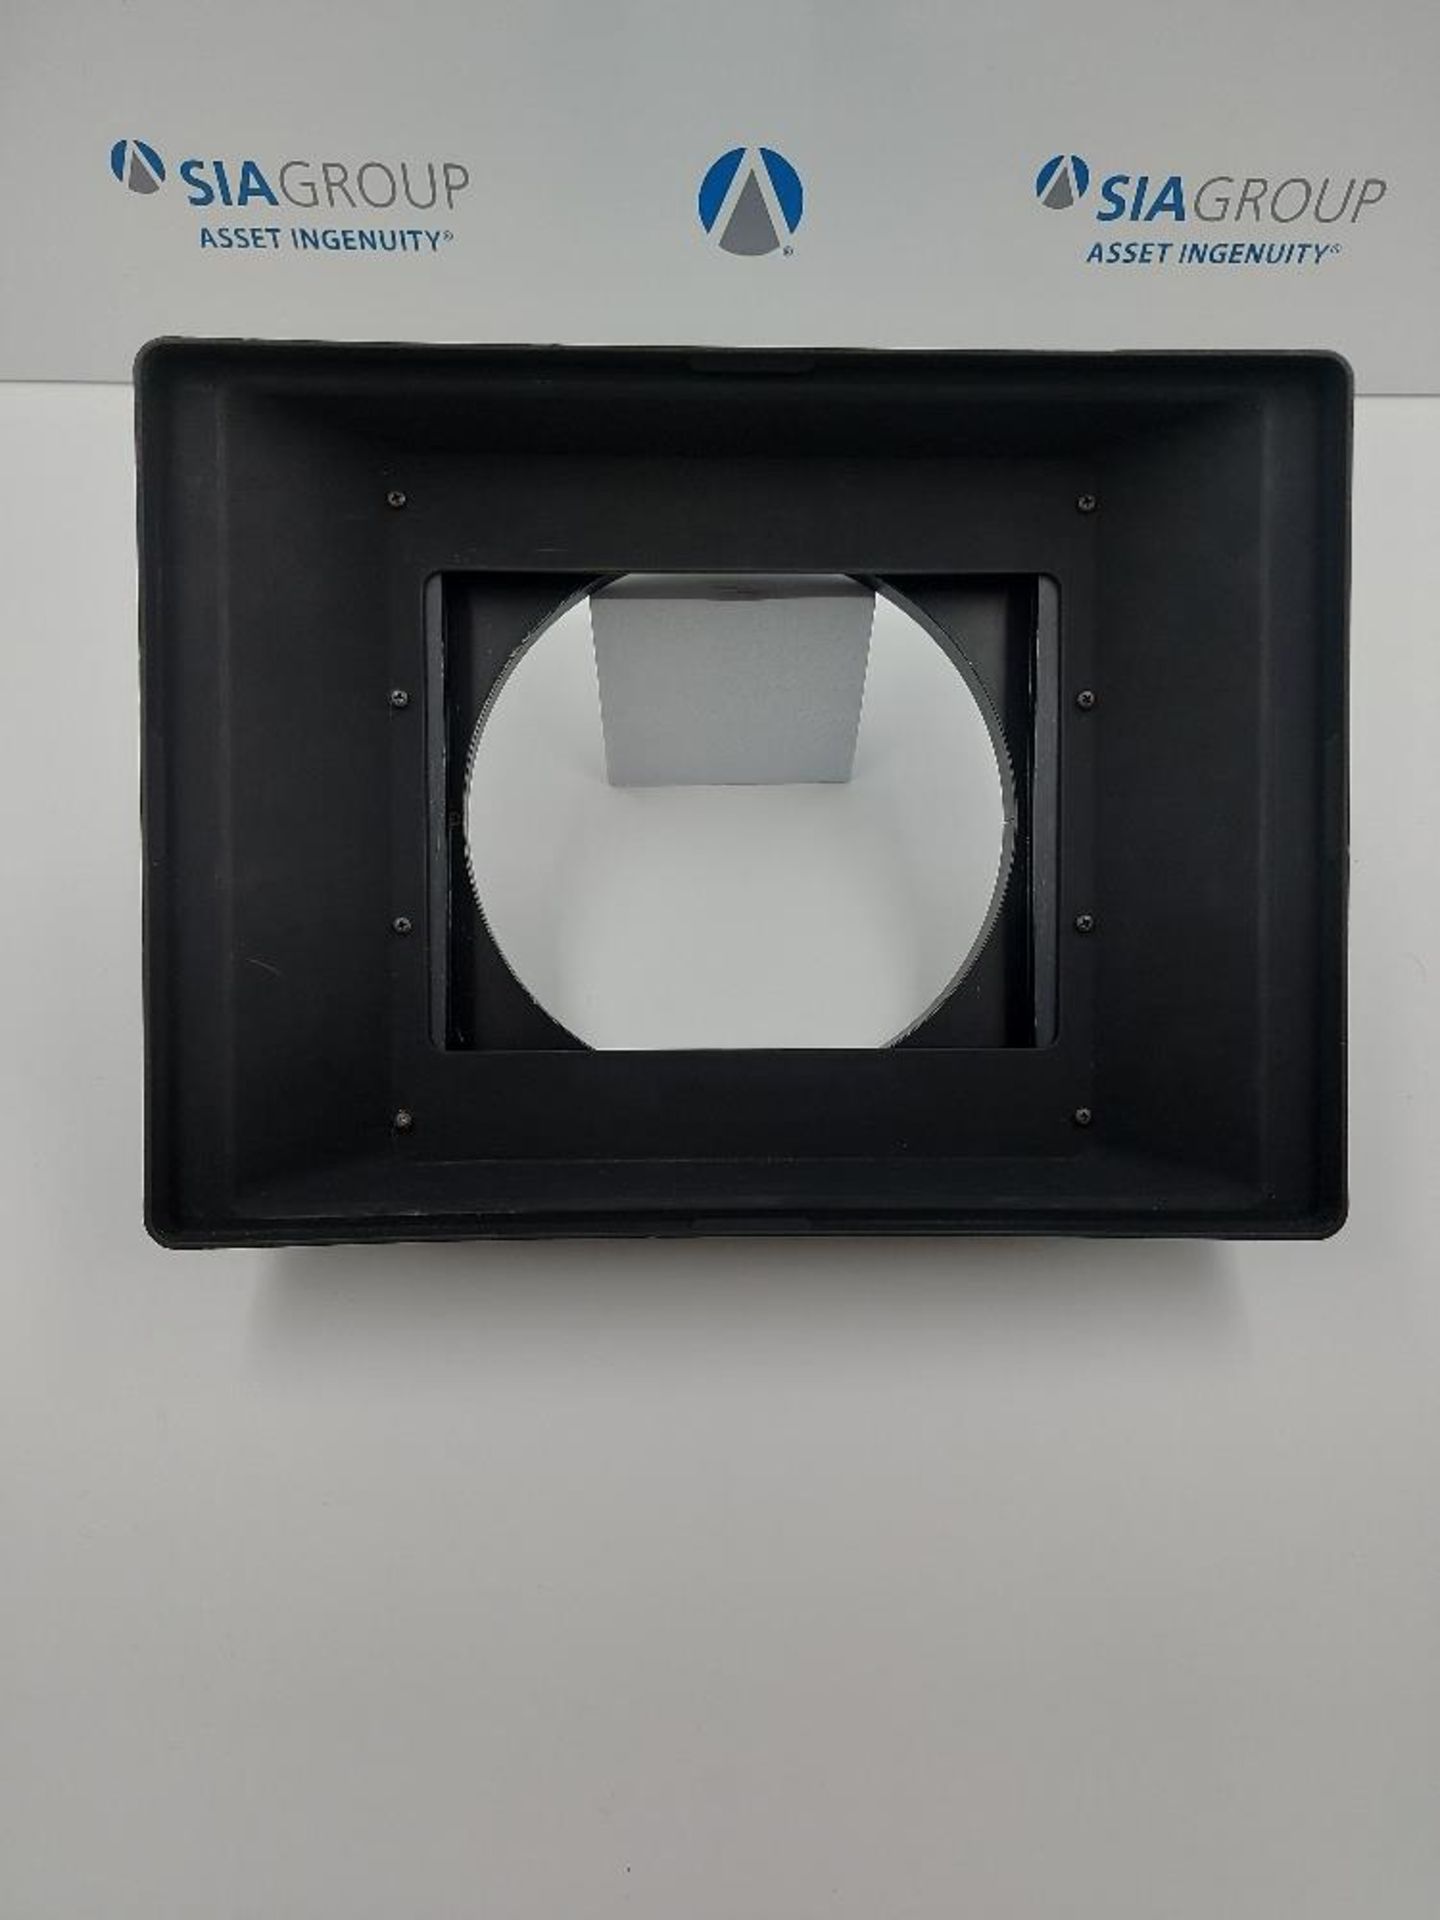 ARRI 12mm T2 S35 Ultra Prime PL Mount Lens Kit - Image 8 of 9